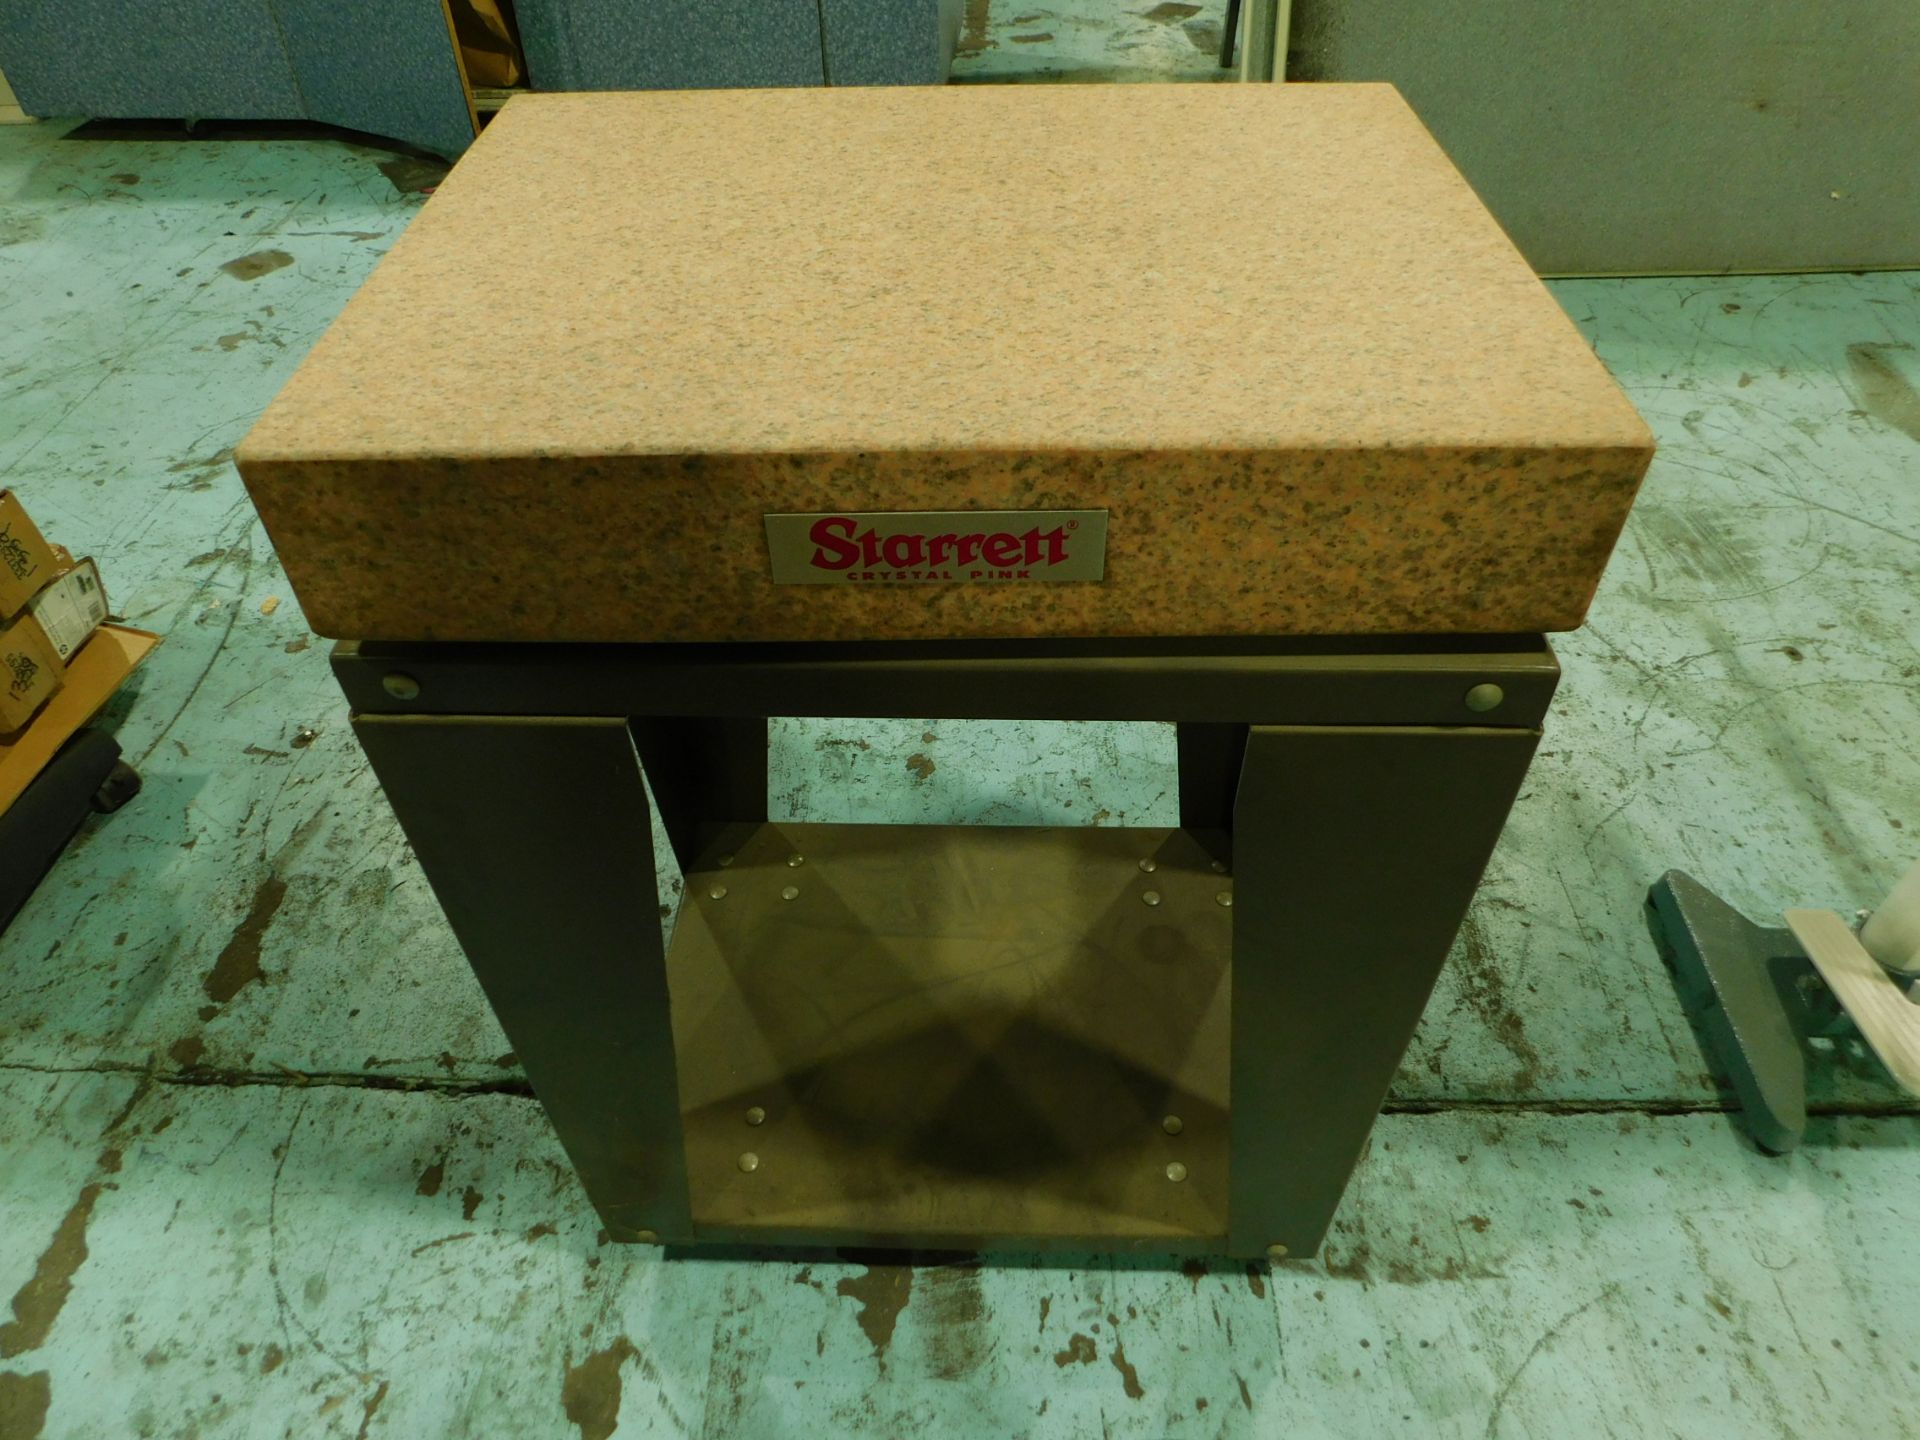 Starrett Granite Surface Plate with Stand, 18" x 24" x 4"